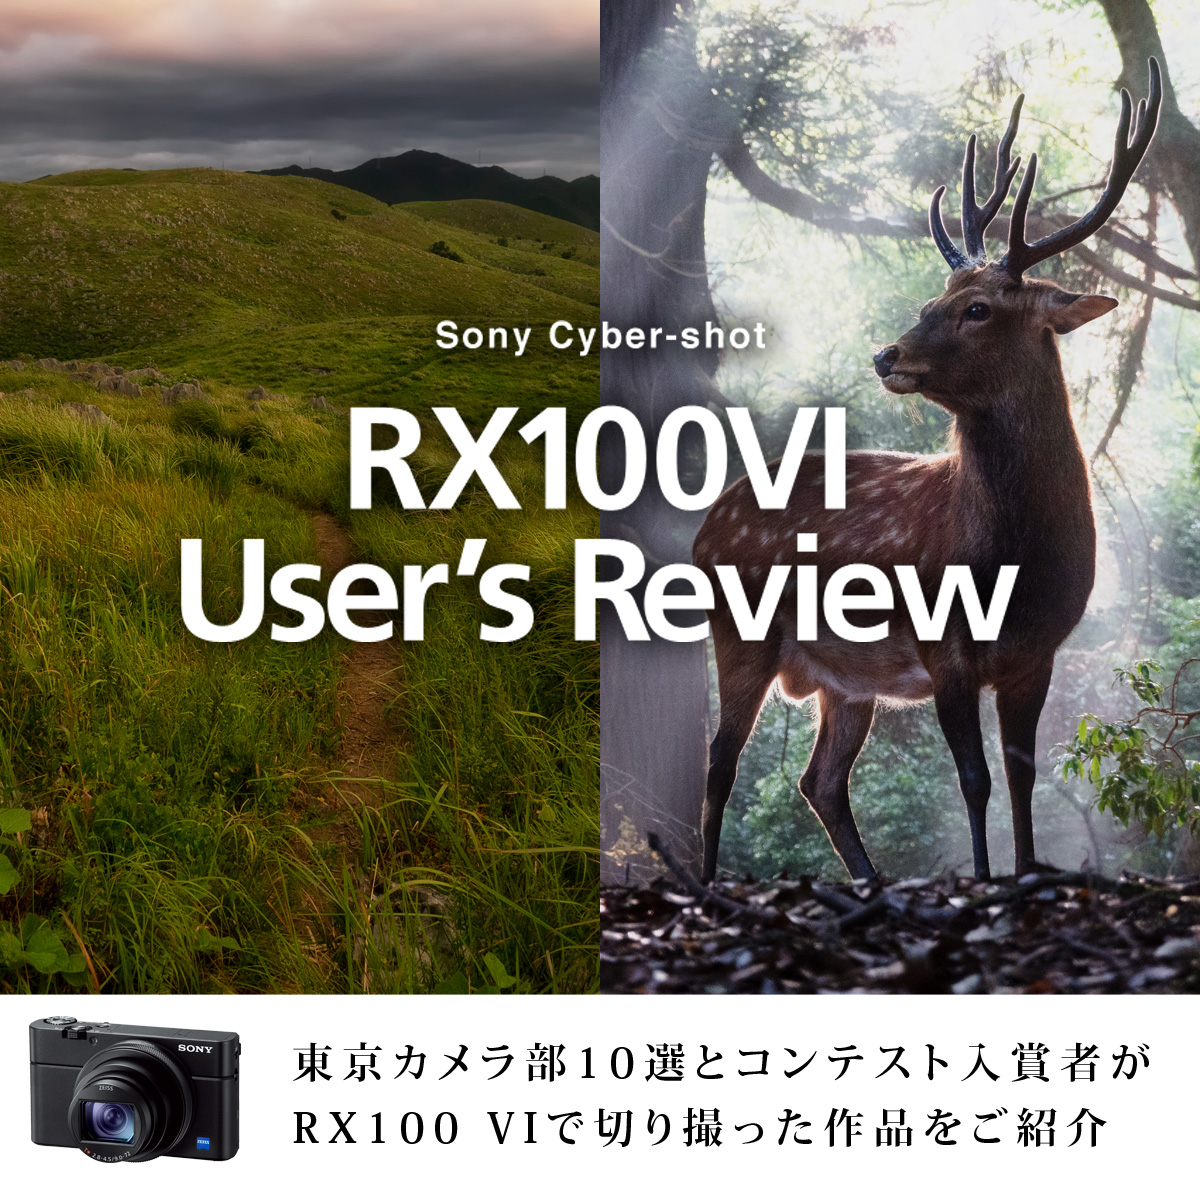 Sony RX100VI User's Review | デジタルスチルカメラ Cyber-shot サイバーショット |